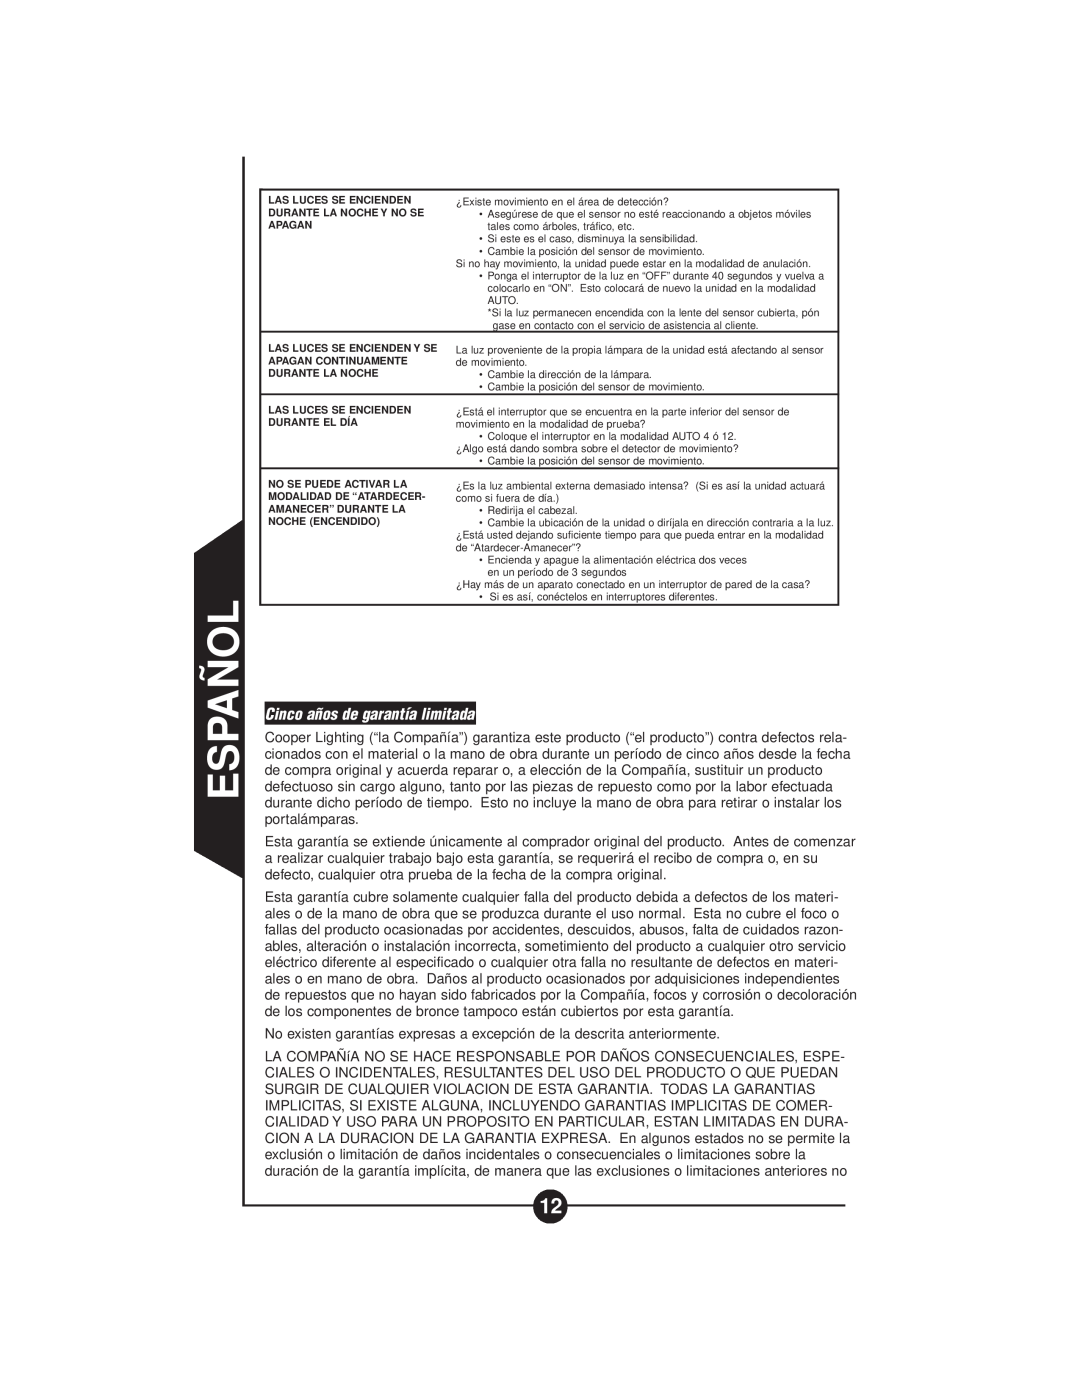 Cooper Lighting CMS188W, CMS188 MS188W instruction manual Cinco años de garantía limitada, Español 